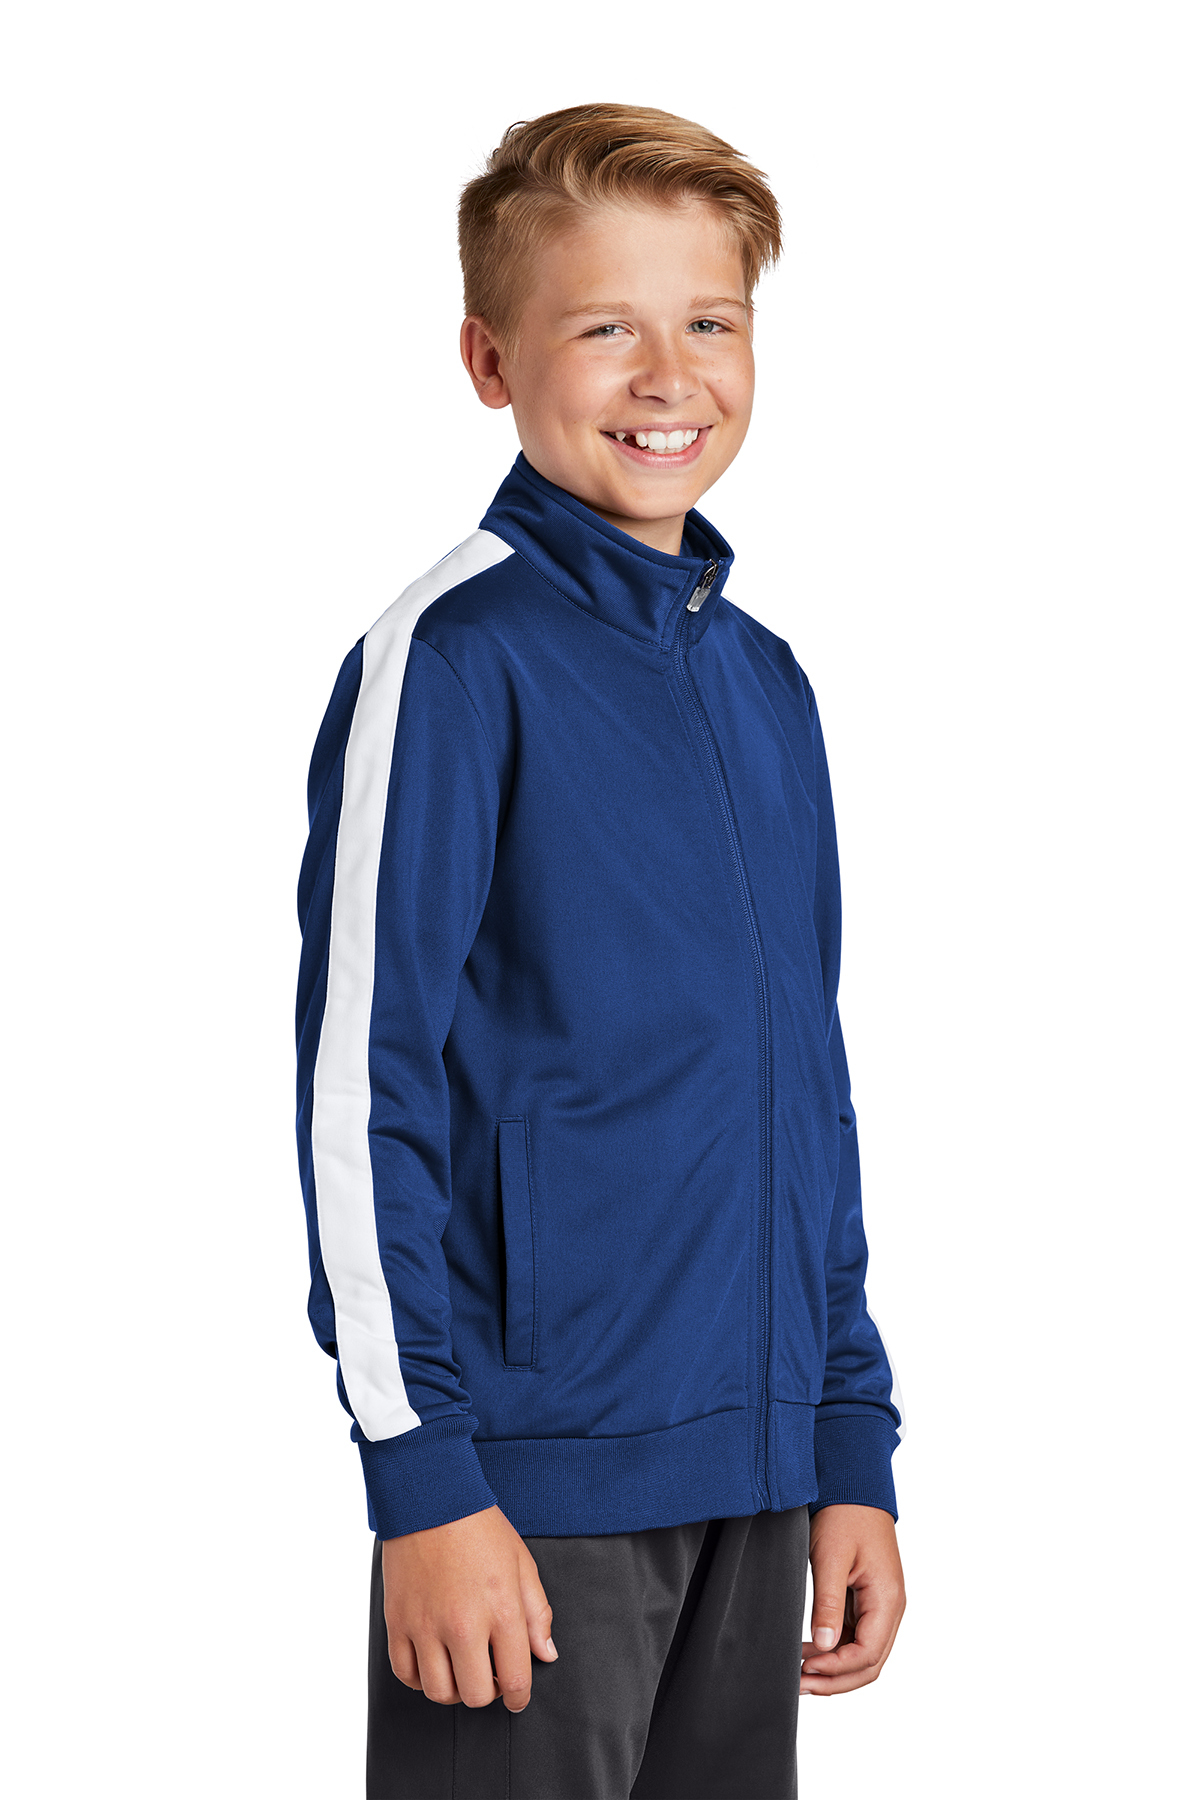 Sport-Tek Youth Tricot Sleeve Stripe Track Jacket | Product | Online ...